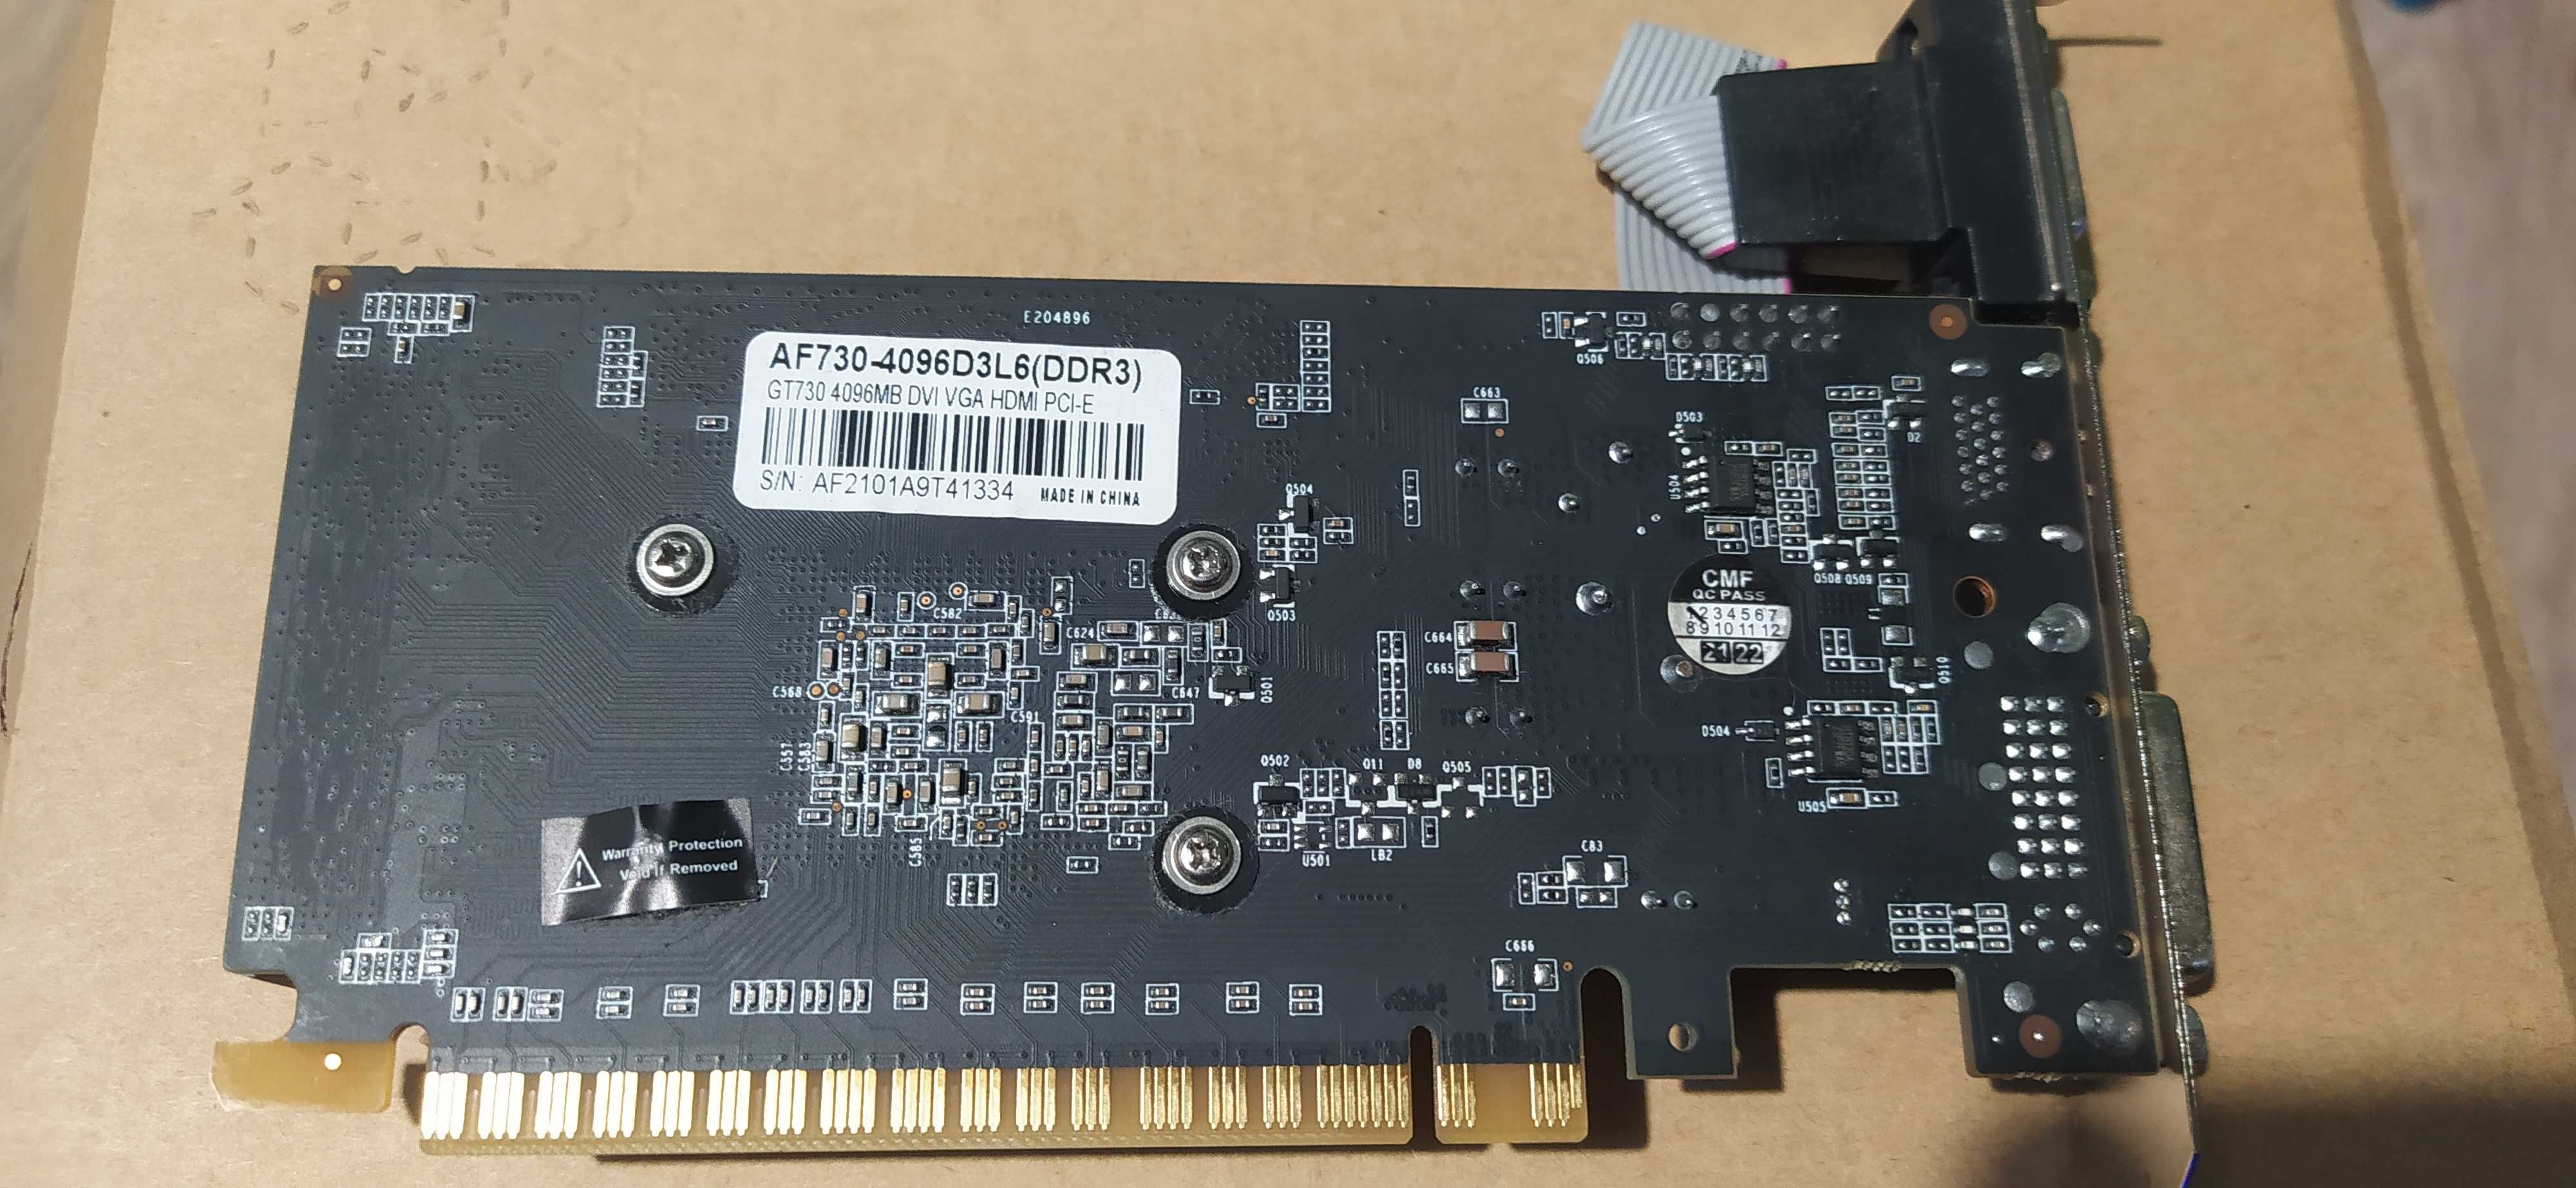 Karta graficzna AFOX NVIDA GeForce GT 730 4GB HDMI DVI VGA PCI-E DDR3